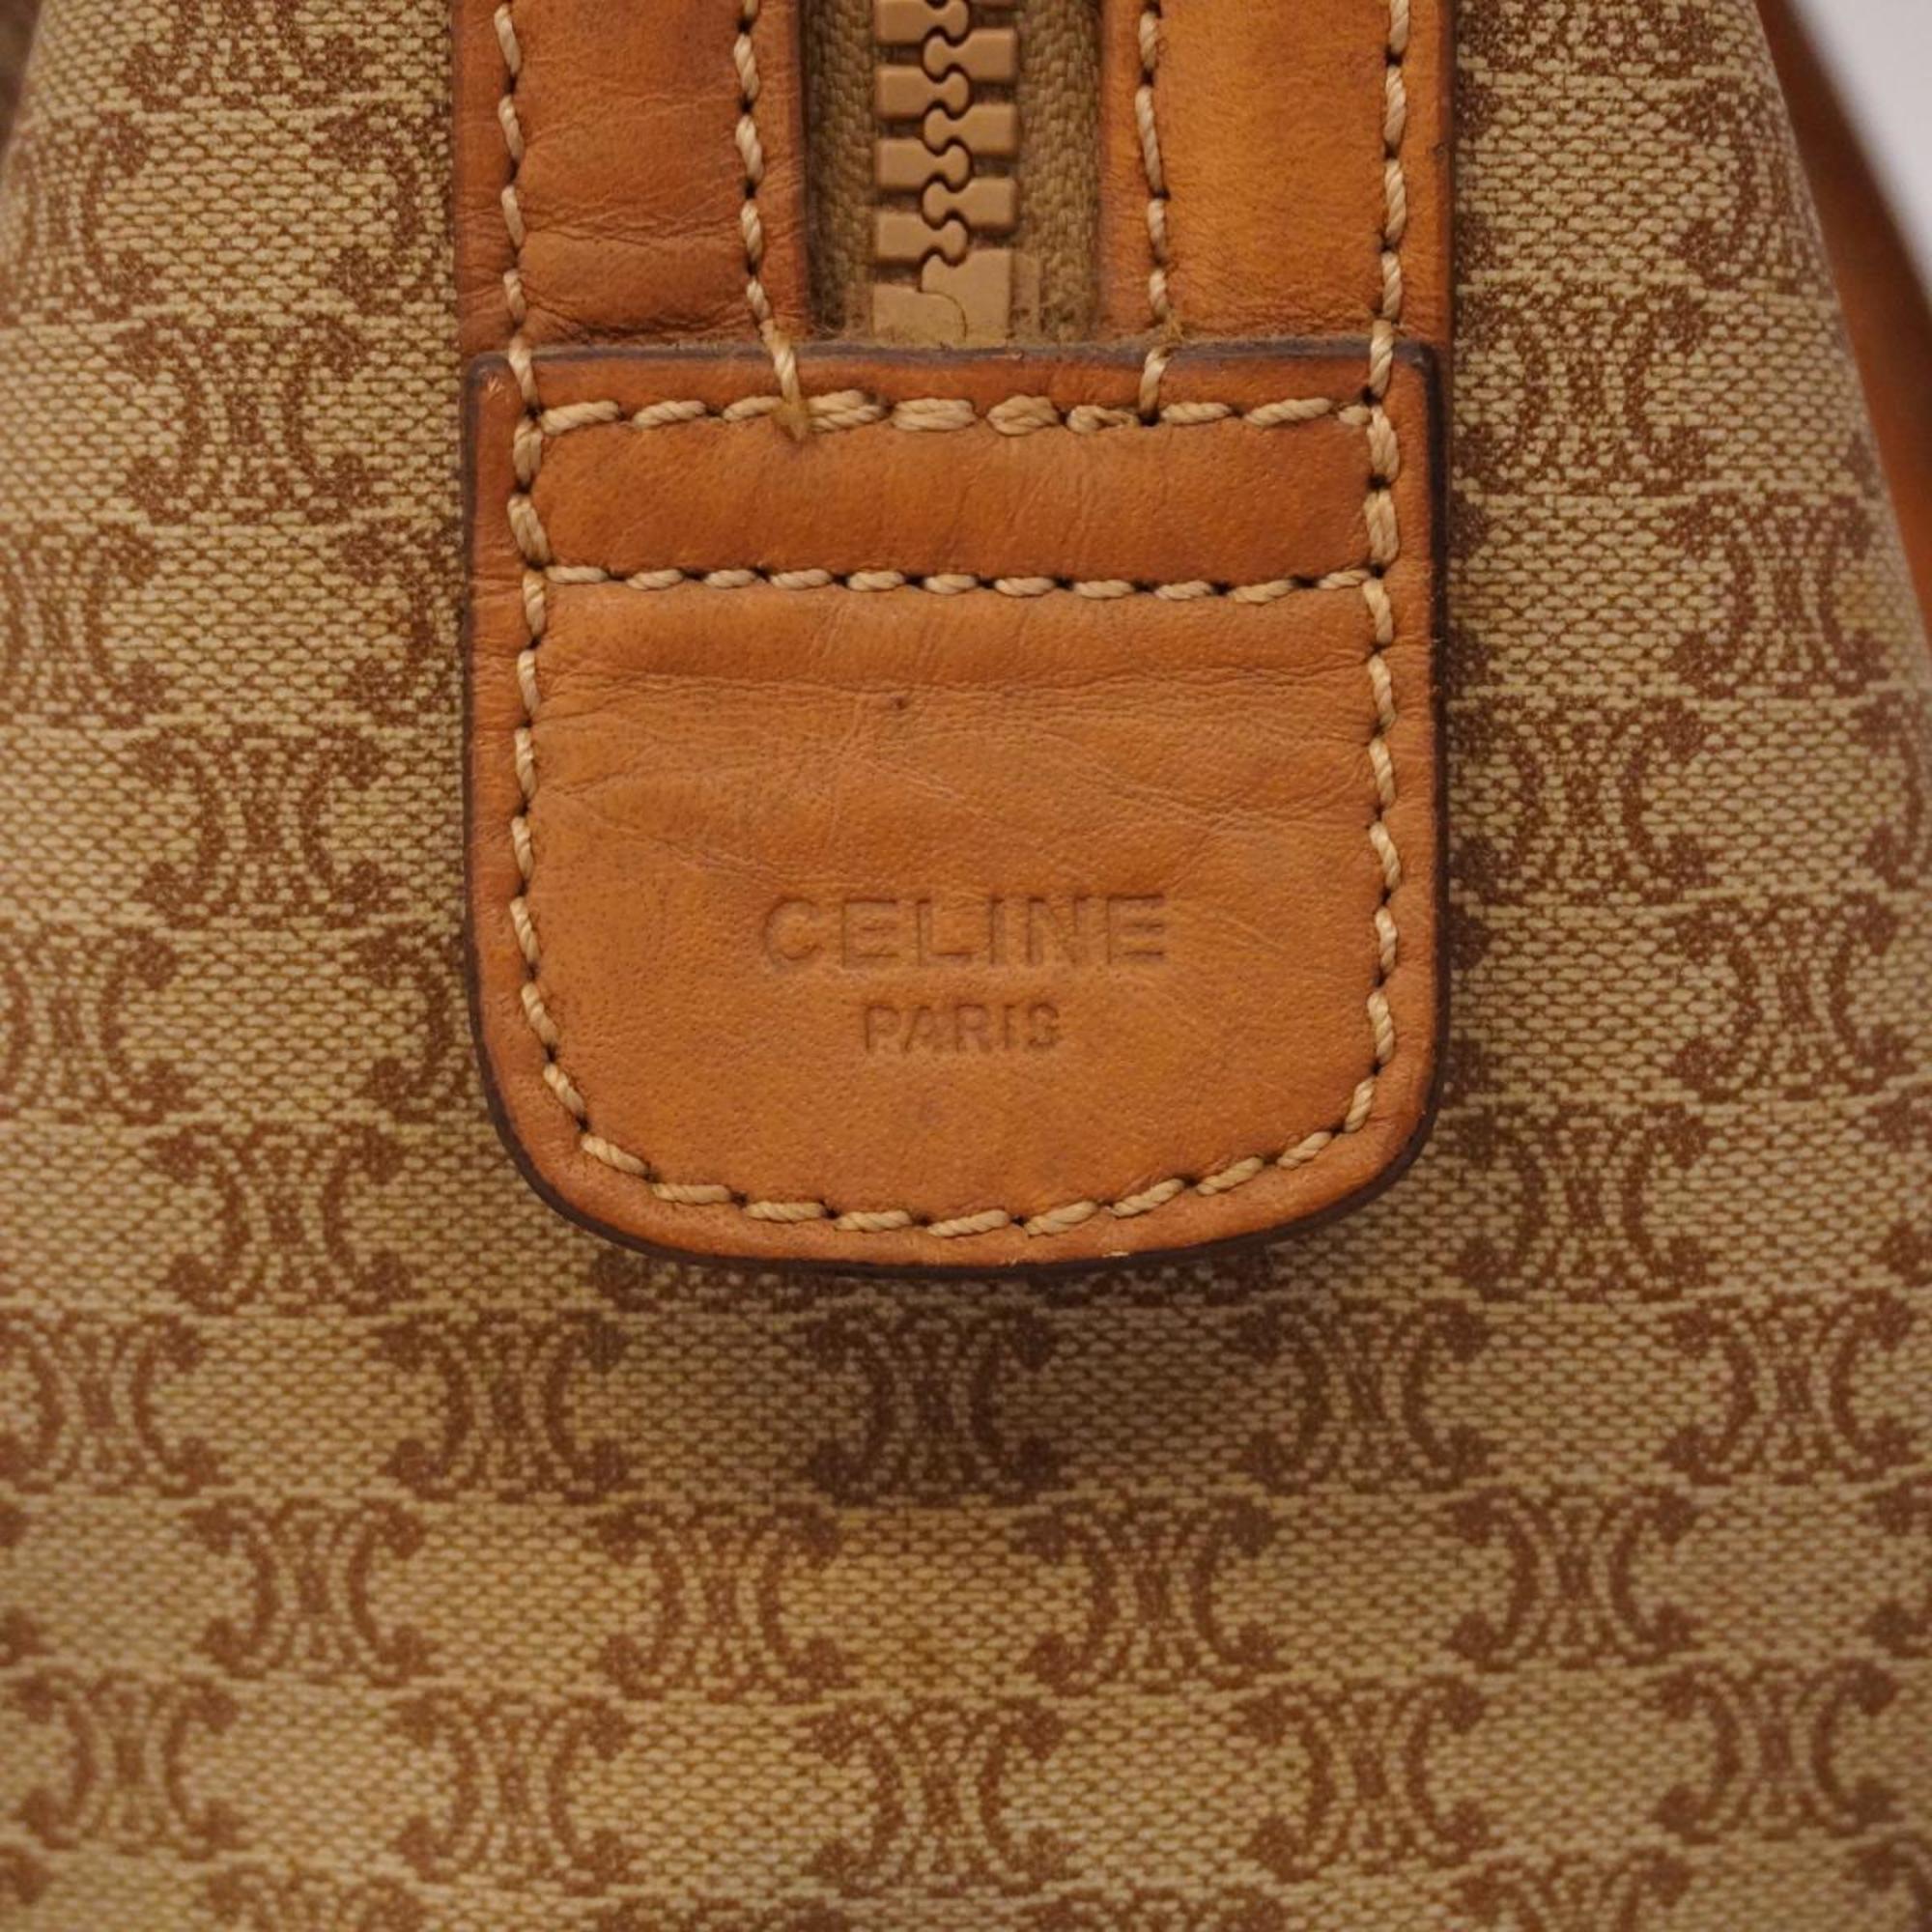 Celine handbag macadam brown ladies